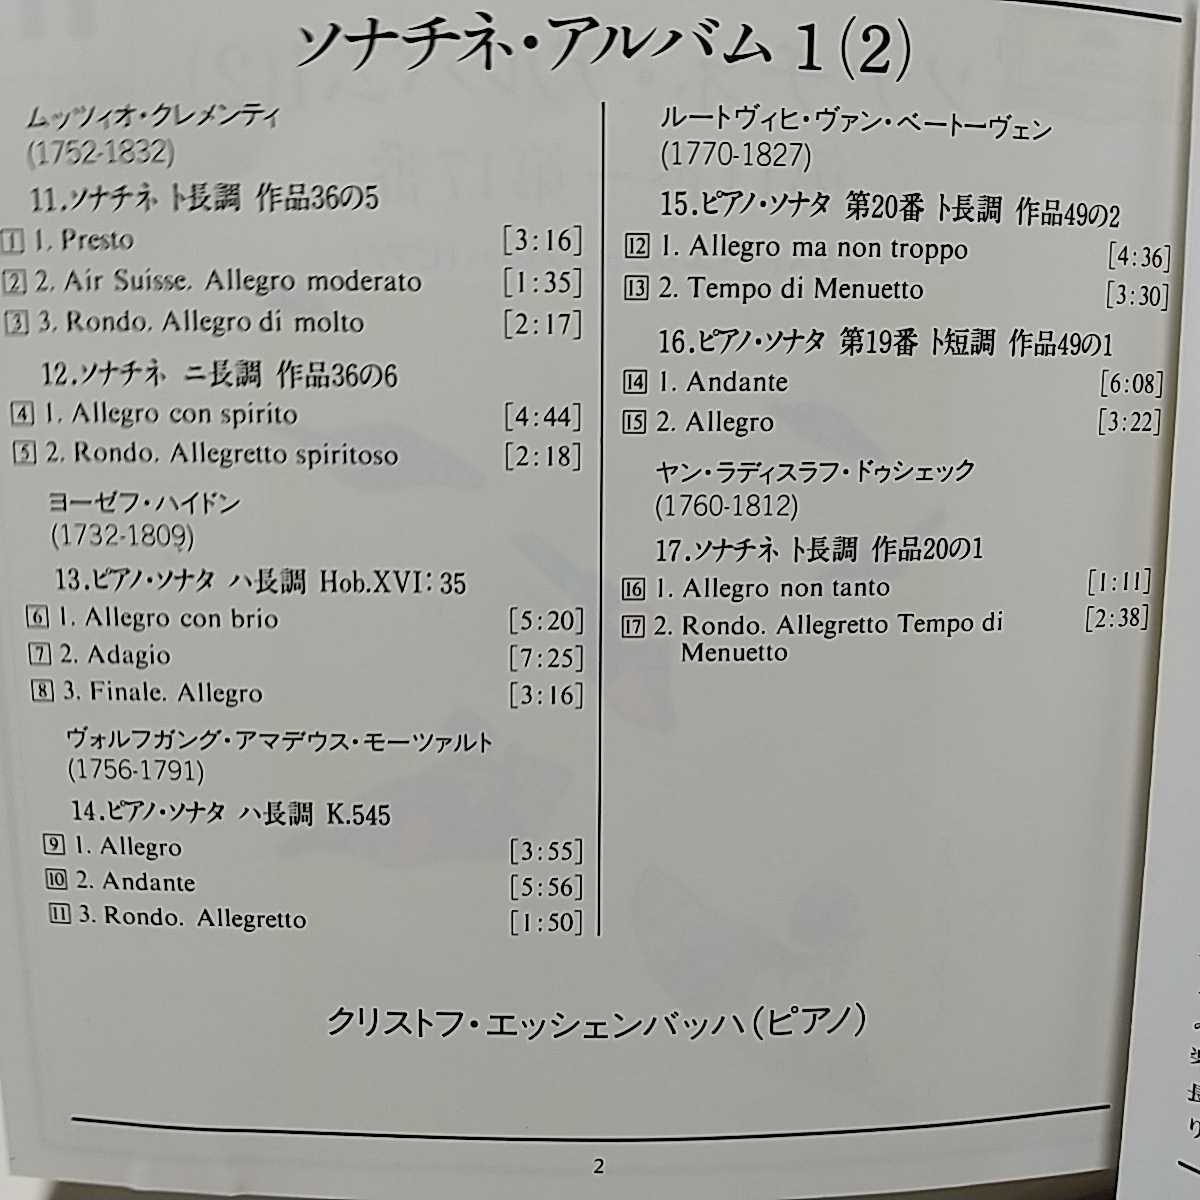 CD ソナチネ・アルバム1(2) 第11番-第17番 クリストフ・エッシェンバッハ ピアノレッスンシリーズ クラシック SONATINA